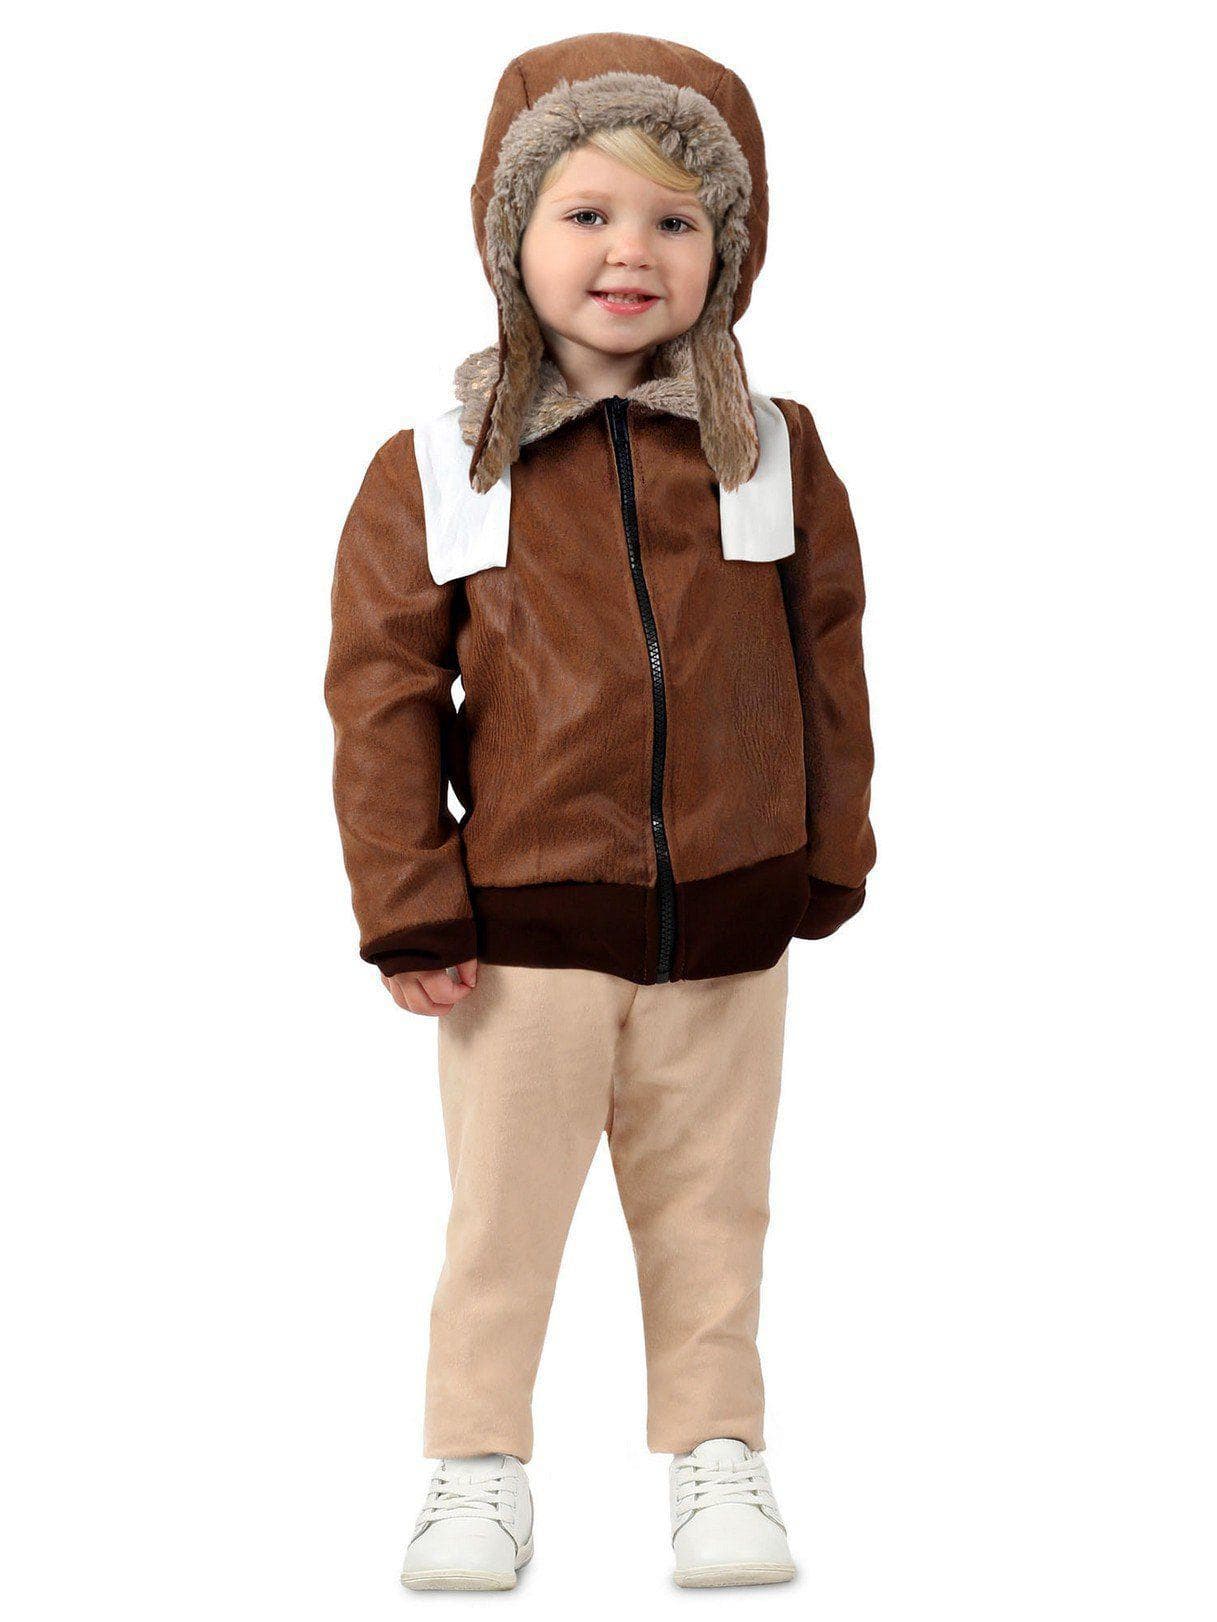 Baby/Toddler Amelia the Aviator Costume - costumes.com